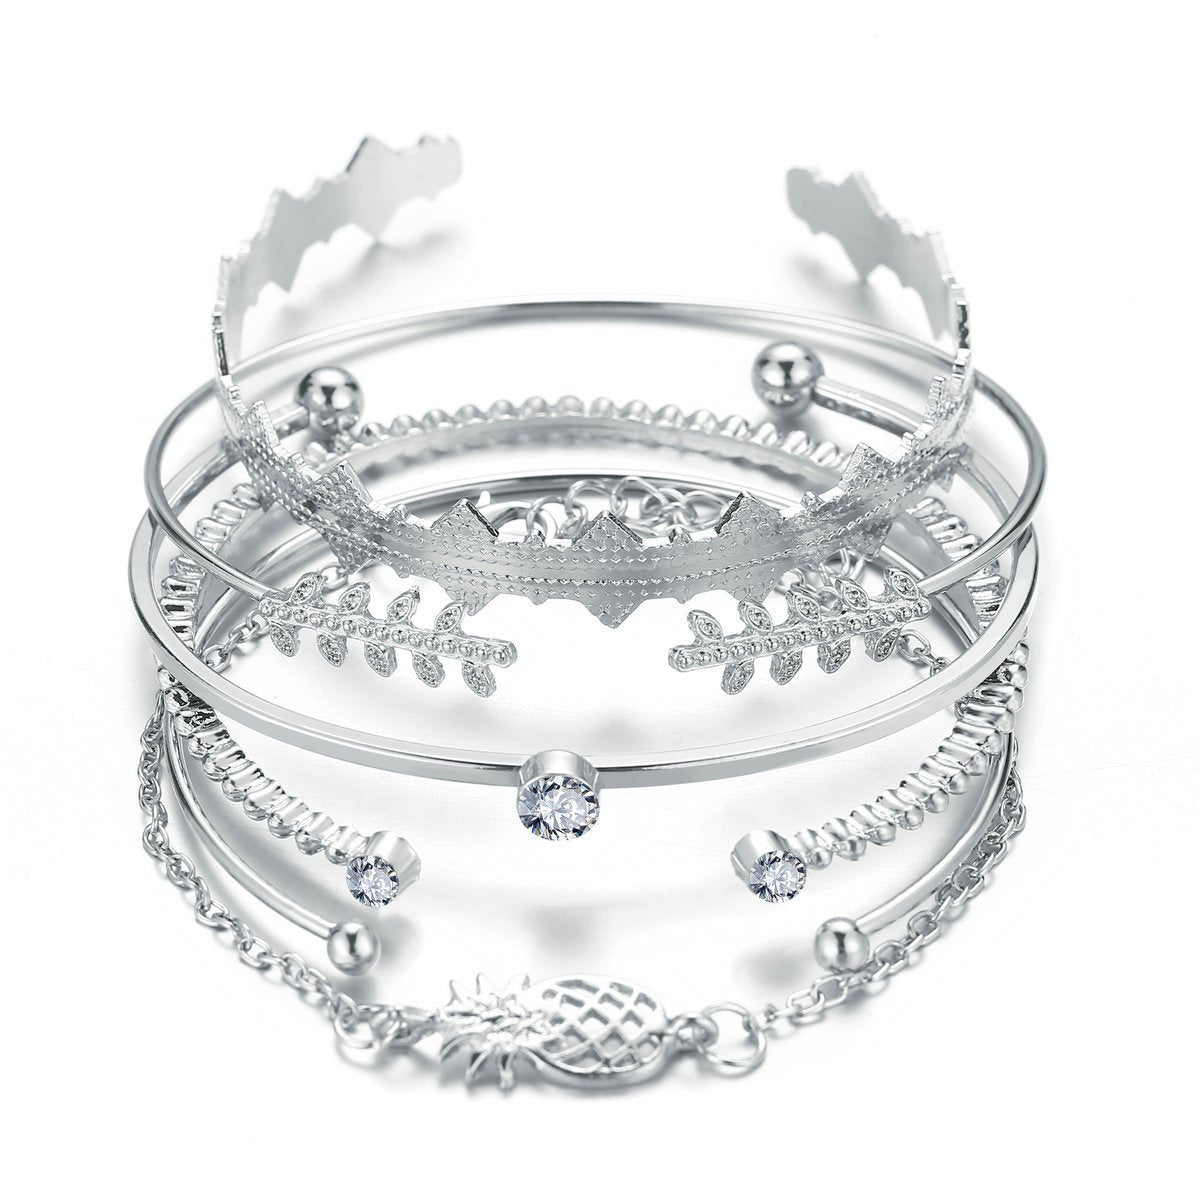 6 Piece Geometric Bangle Set With Austrian  Crystals 18K White Gold Plated Bracelet ITALY Design Elsy Style Bracelet